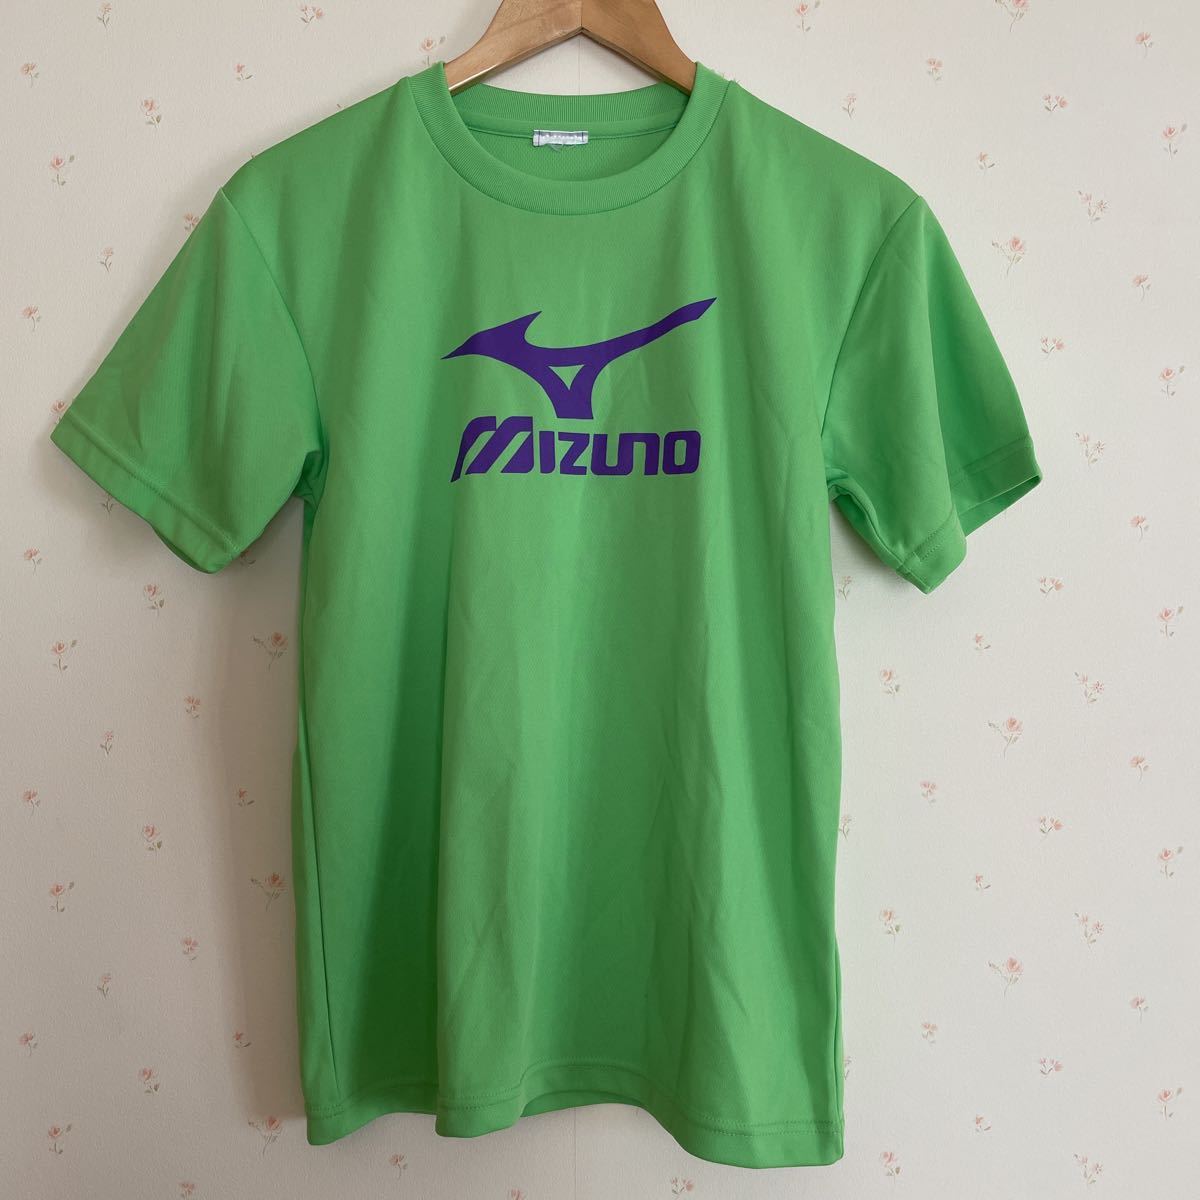 MIZUNO Mizuno p Ractis shirt short sleeves T-shirt polyester S size 